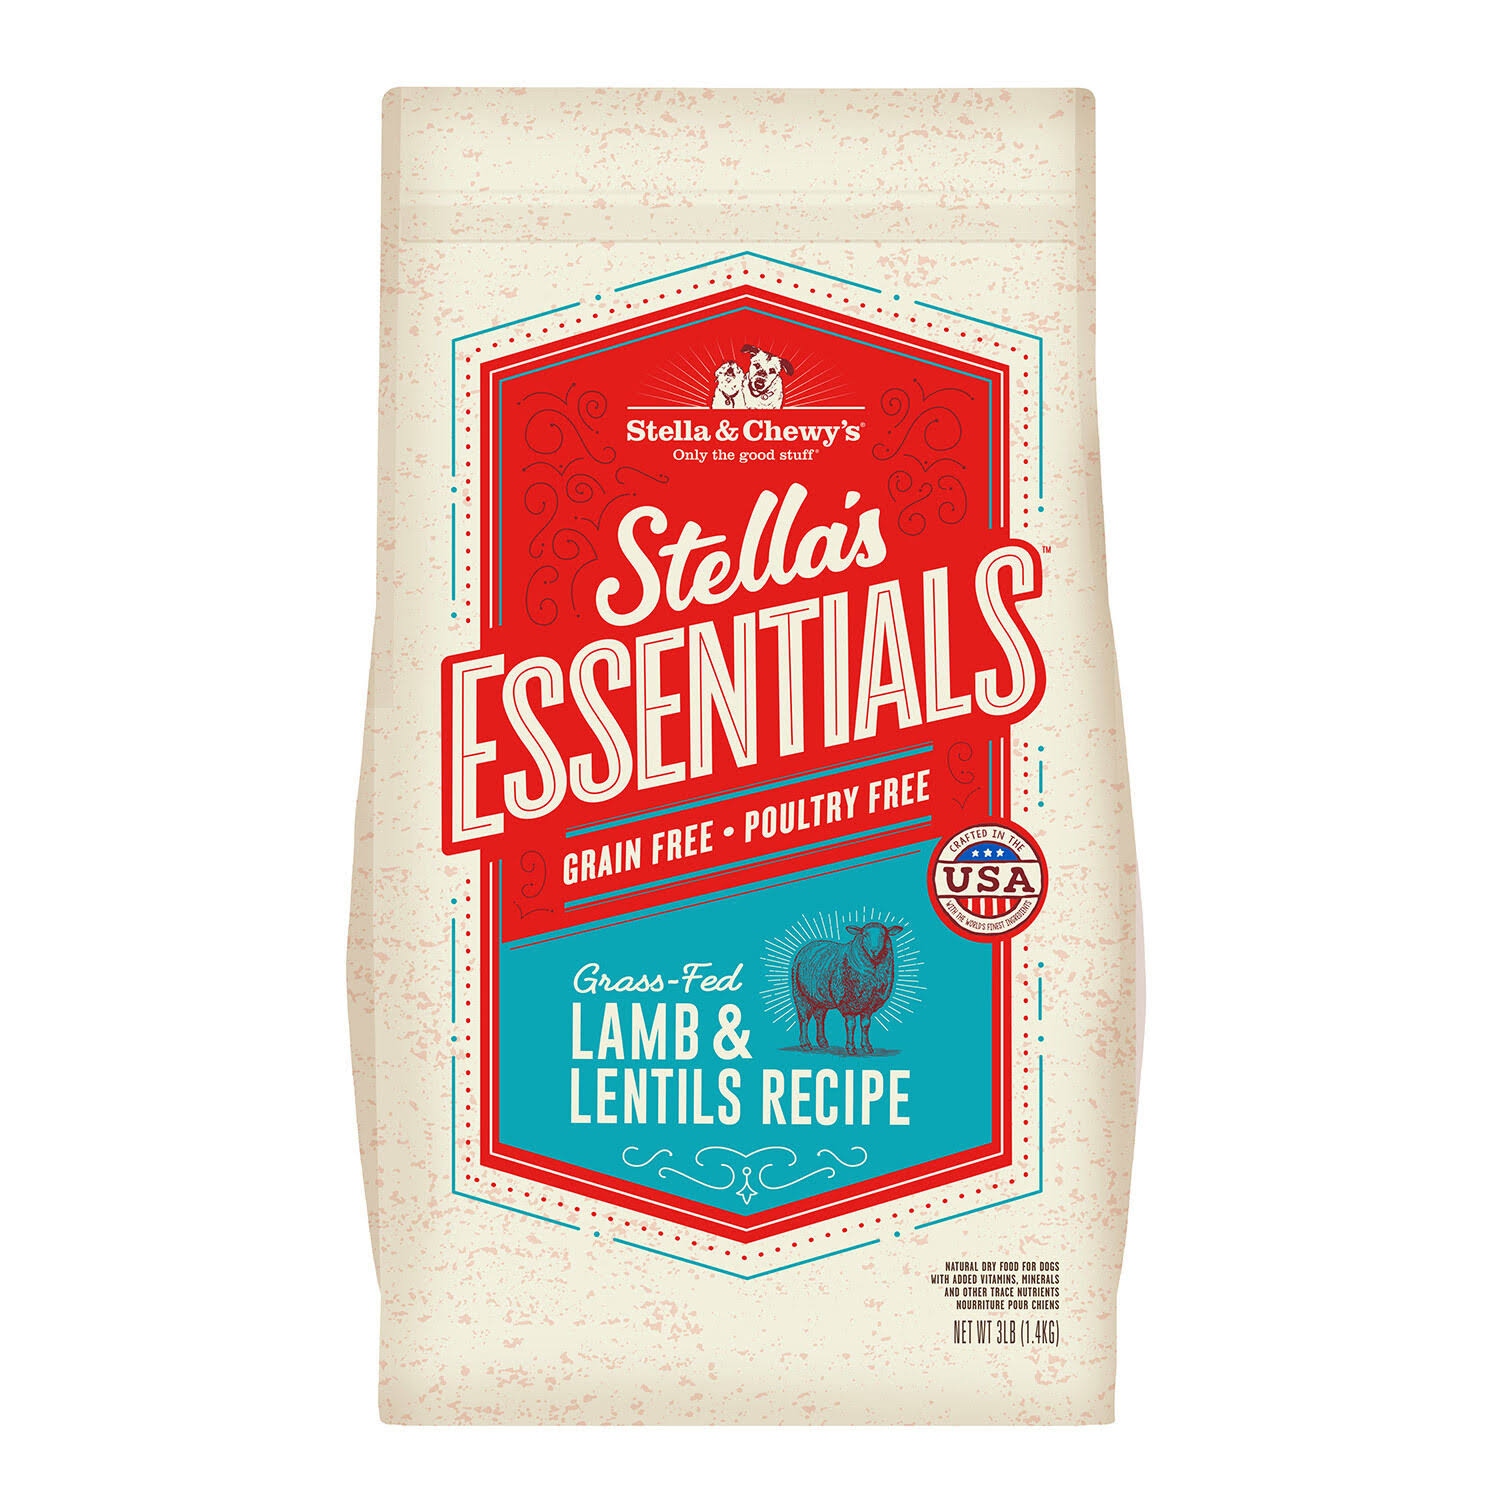 Stella & Chewy's Essentials Grain-Free Grass-Fed Lamb & Lentils Recipe Dog Food - 25-Lbs.